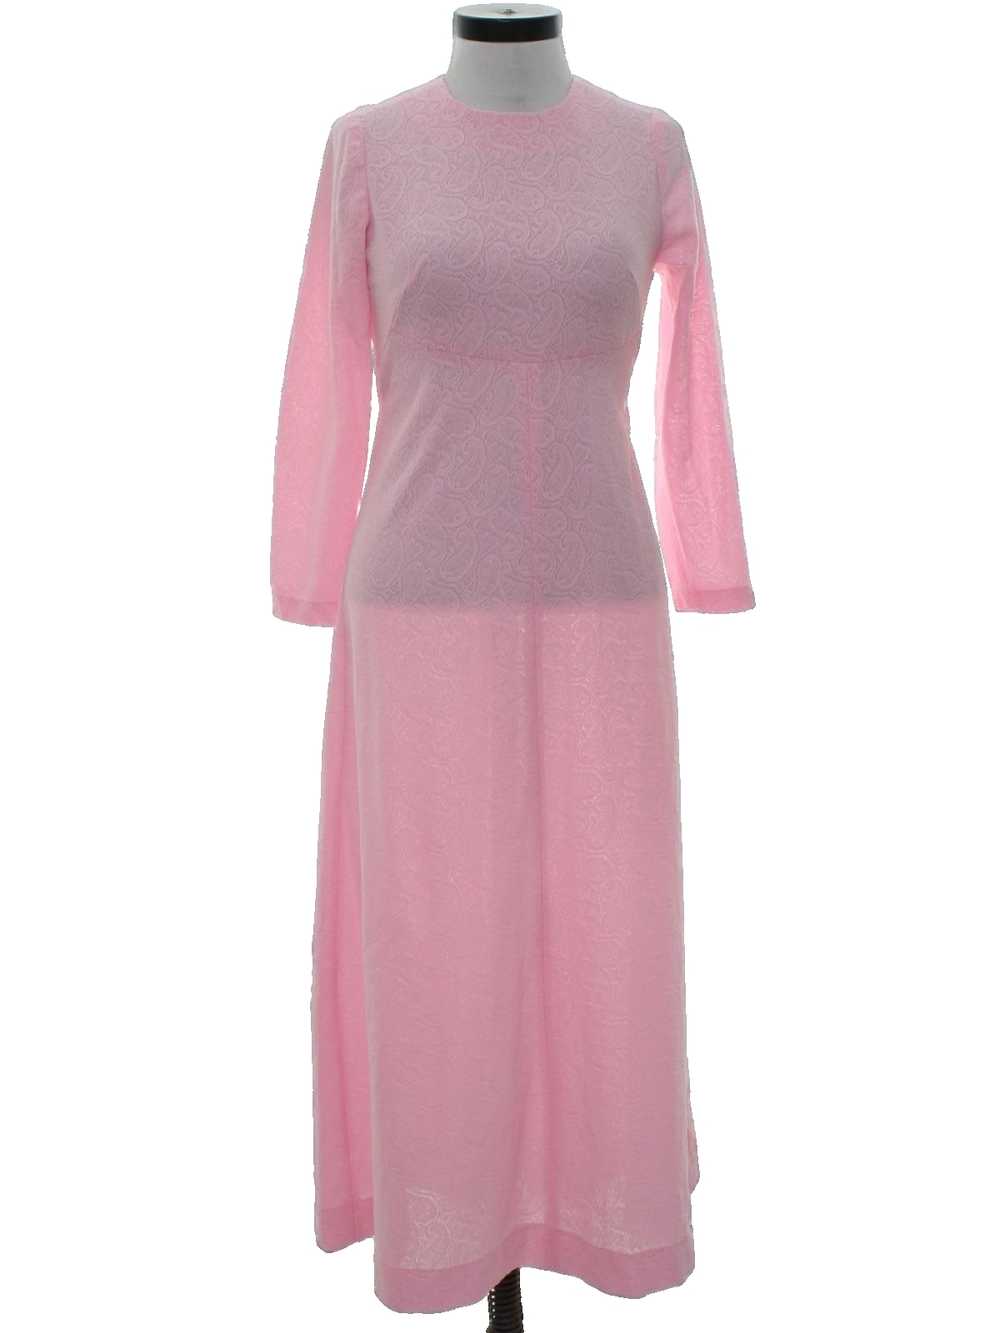 1960's Knit Cocktail Maxi Dress - image 1